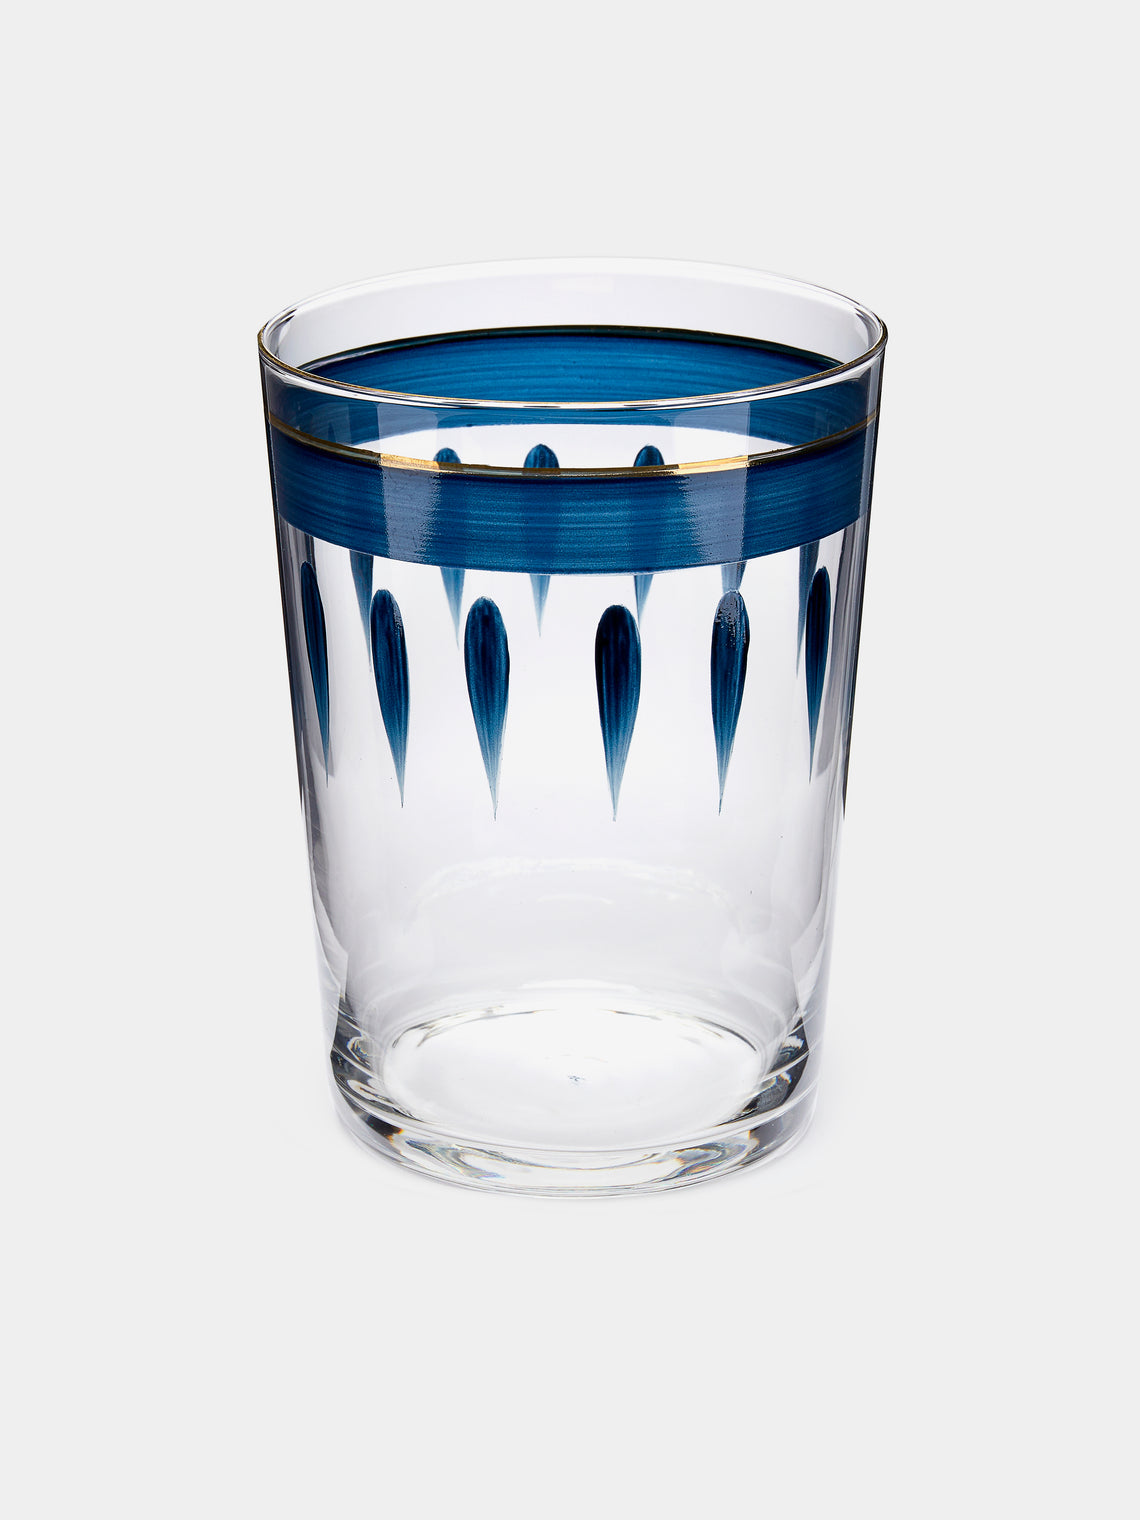 Los Vasos de Agua Clara - Soul Hand-Painted Glass Tumblers (Set of 6) - Blue - ABASK - 